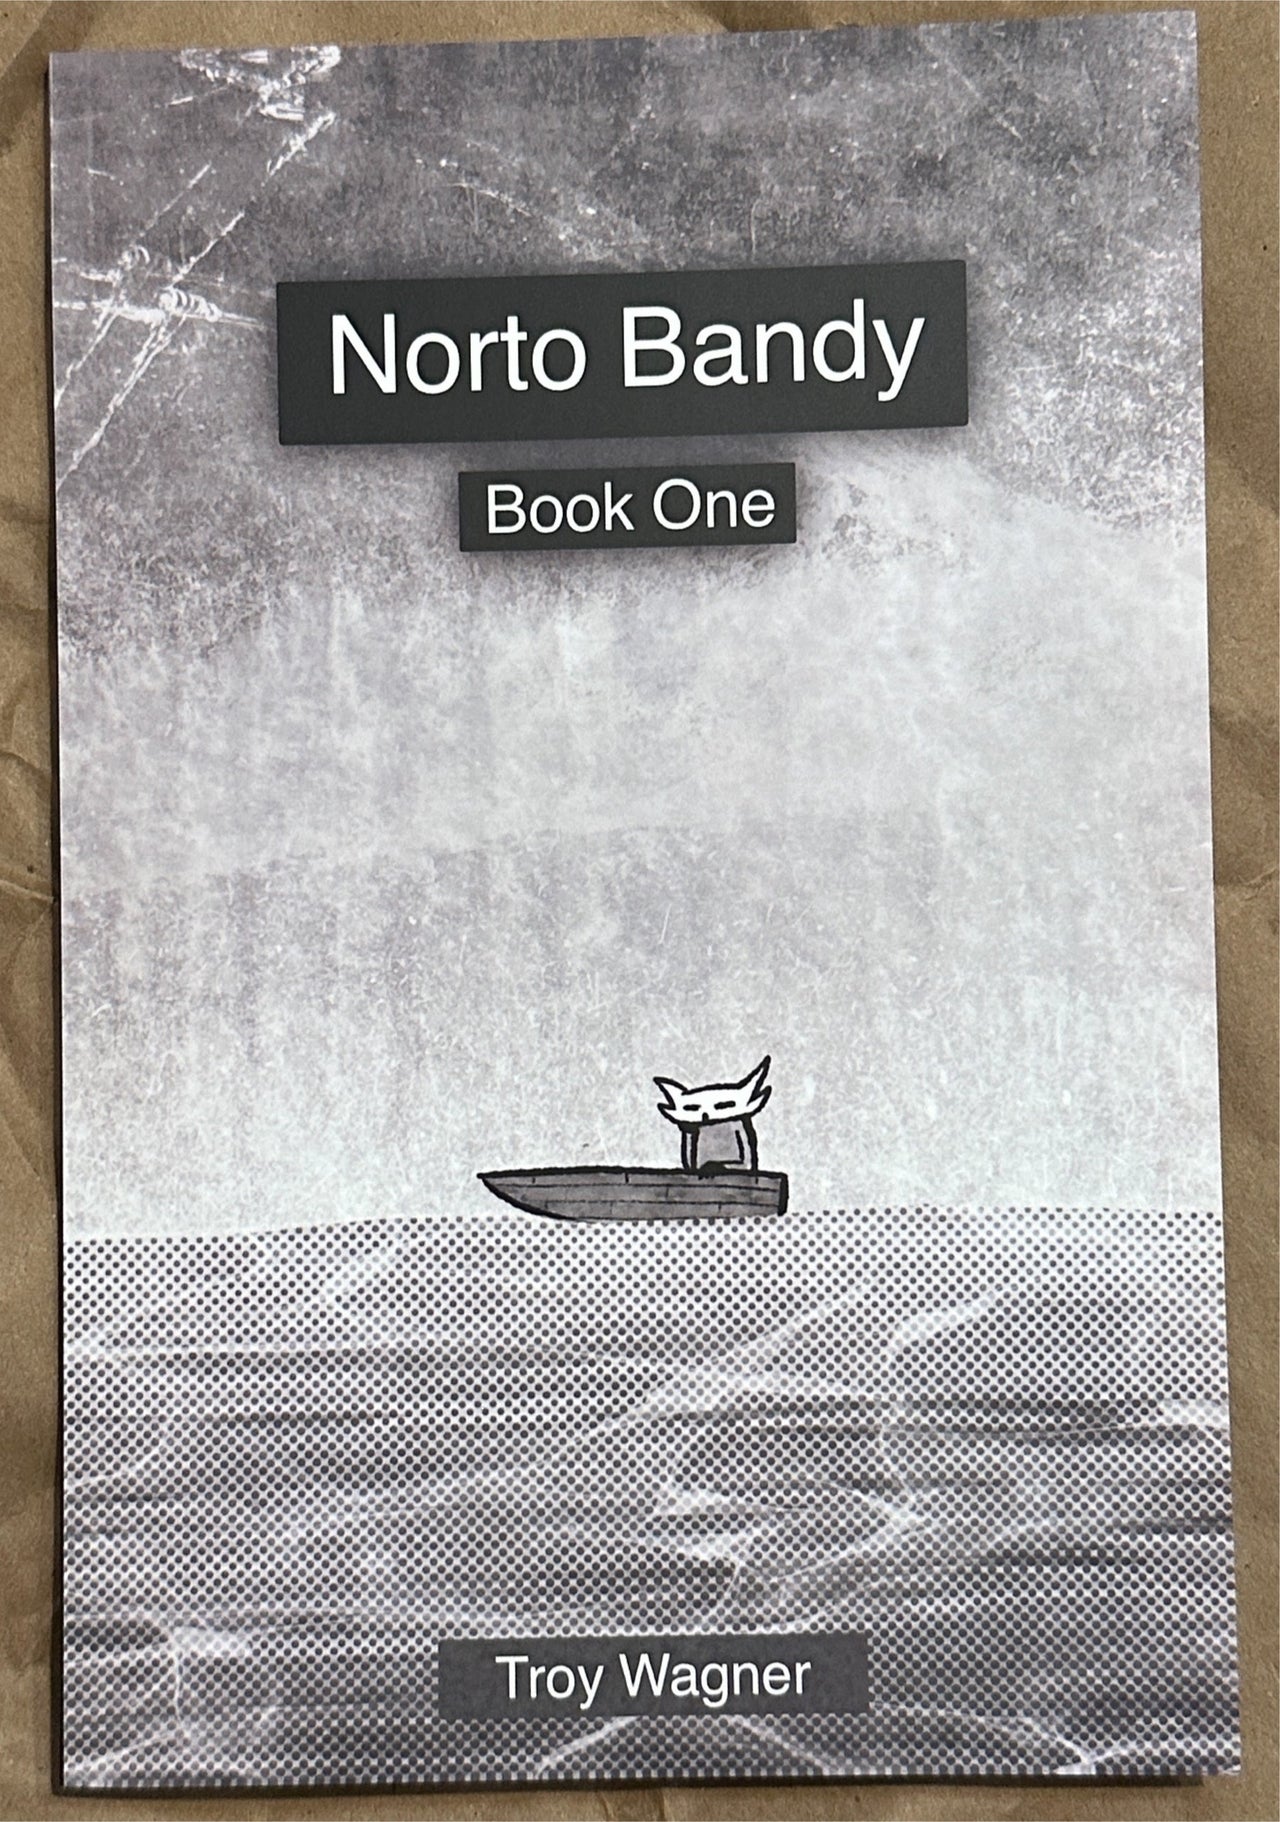 Print Edition - Norto Bandy book 1